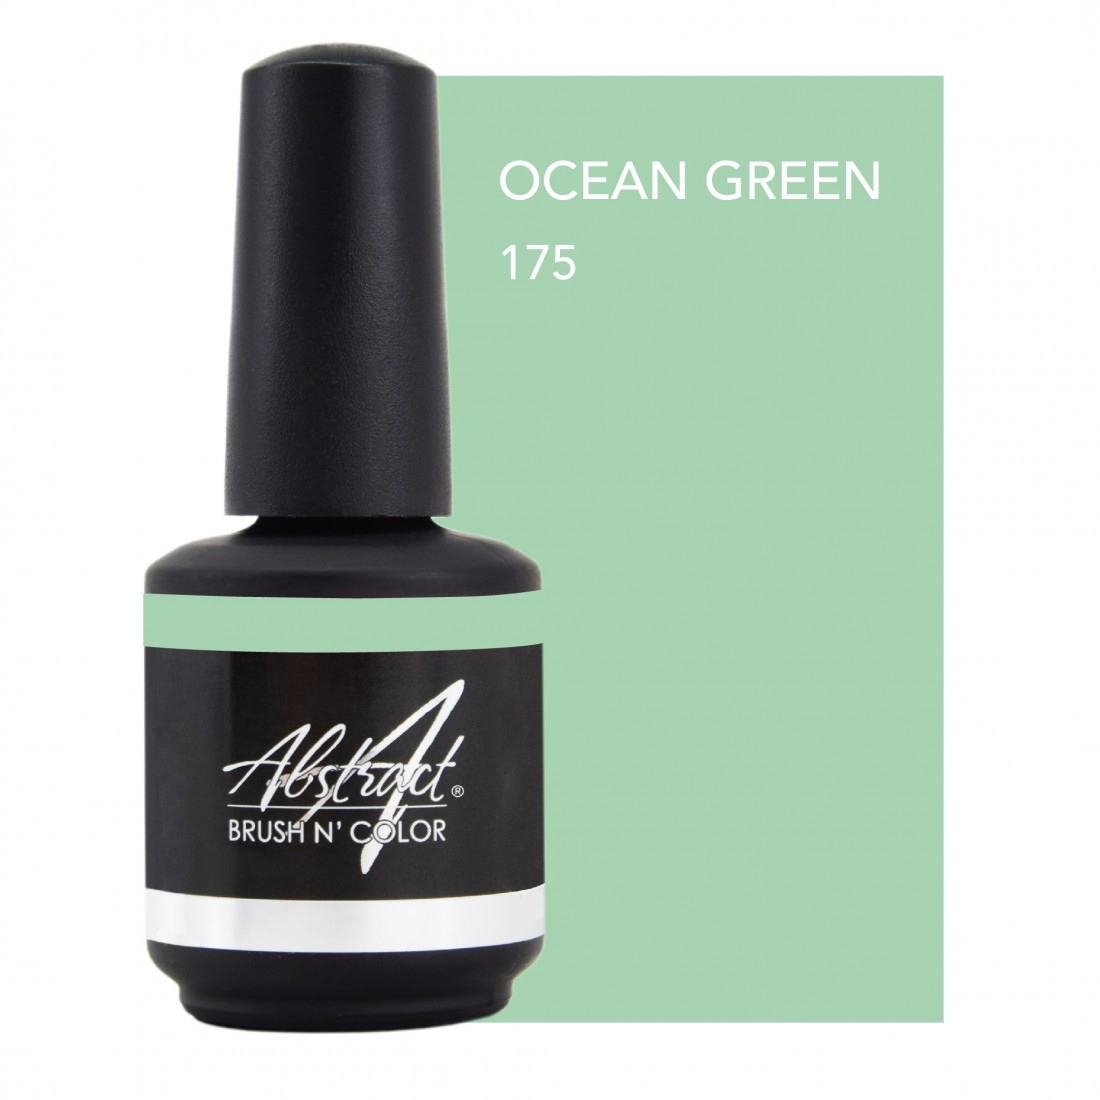 Abstract Ocean green 15 ml